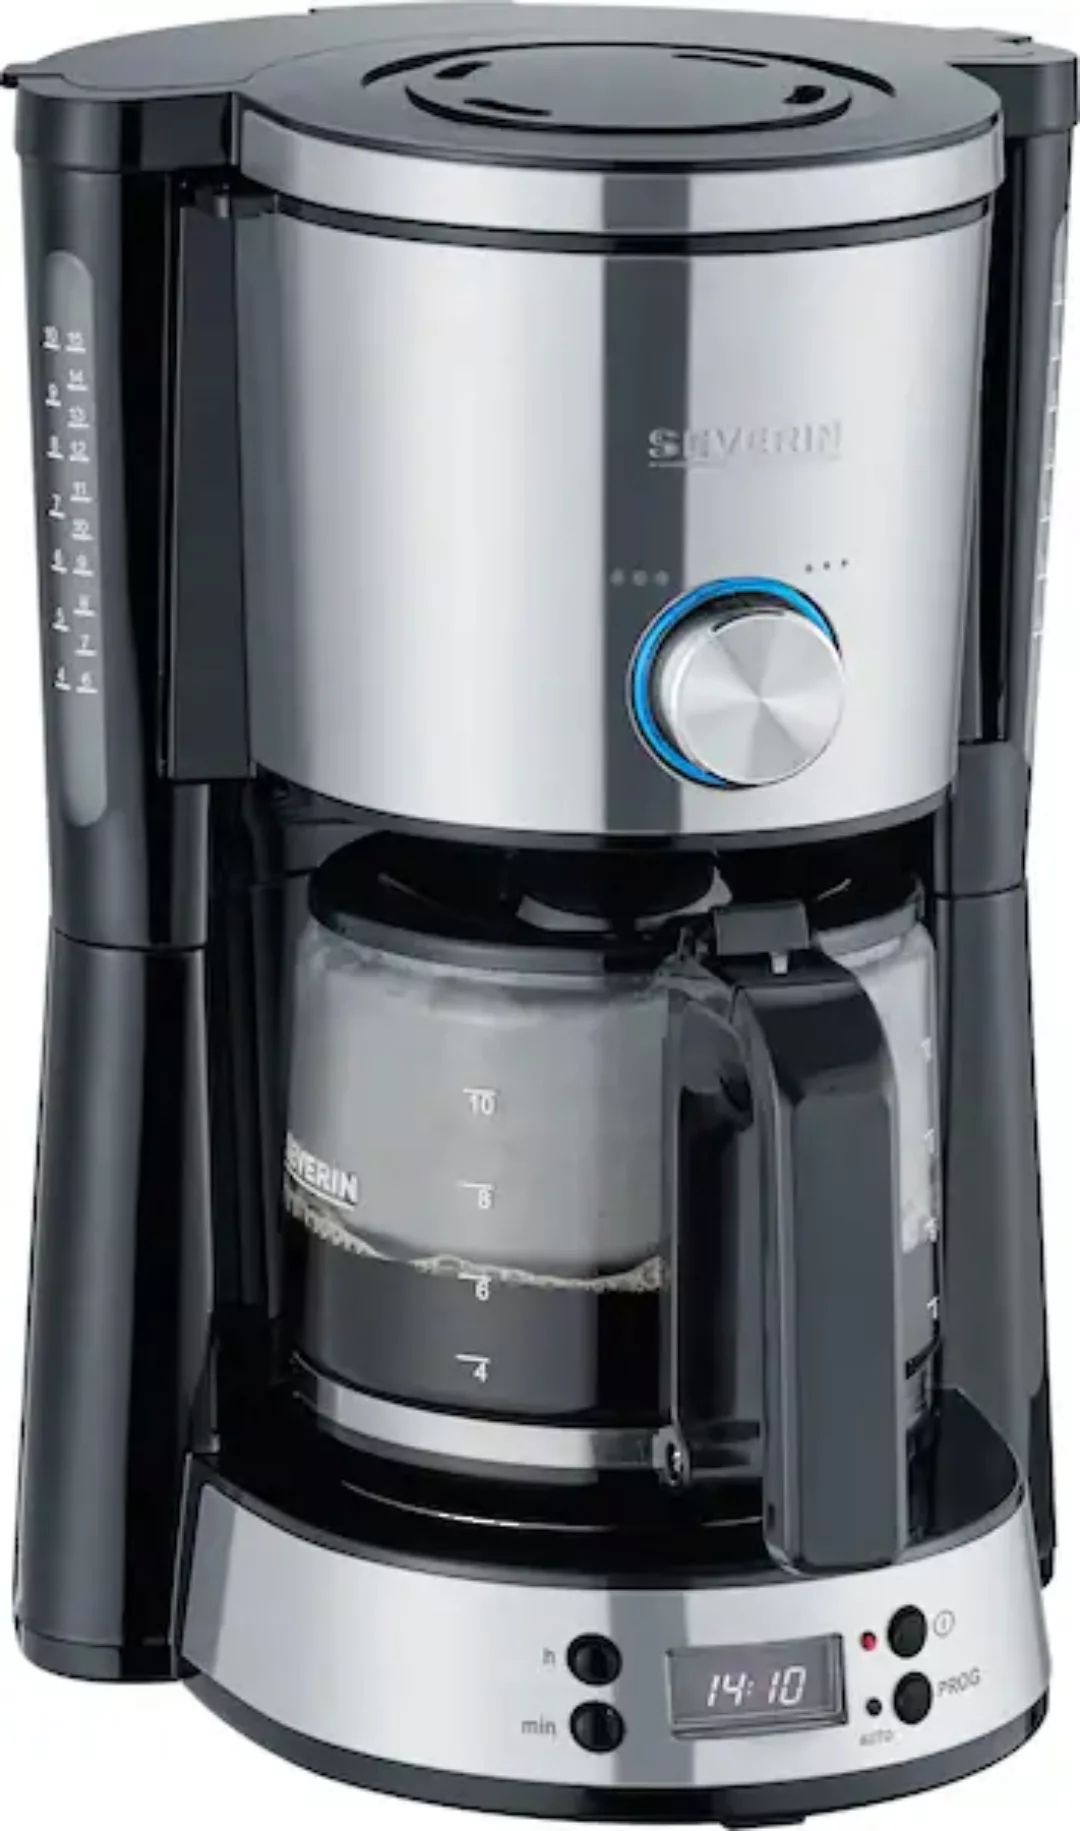 Severin Filterkaffeemaschine »KA 4826«, 1,25 l Kaffeekanne, 1x4 günstig online kaufen